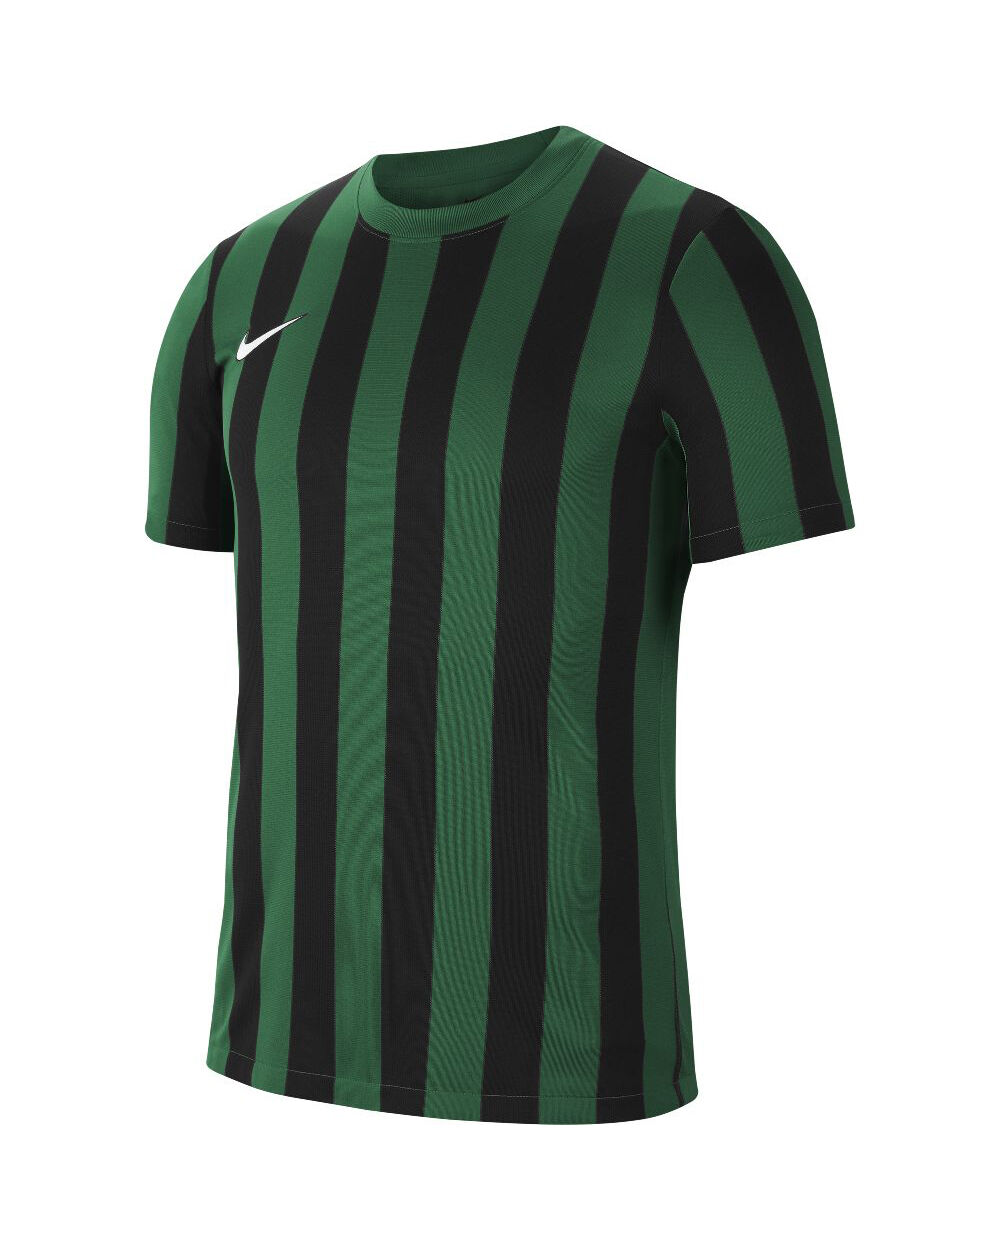 Camiseta Nike Striped Division IV Verde y Negro para Hombre - CW3813-302